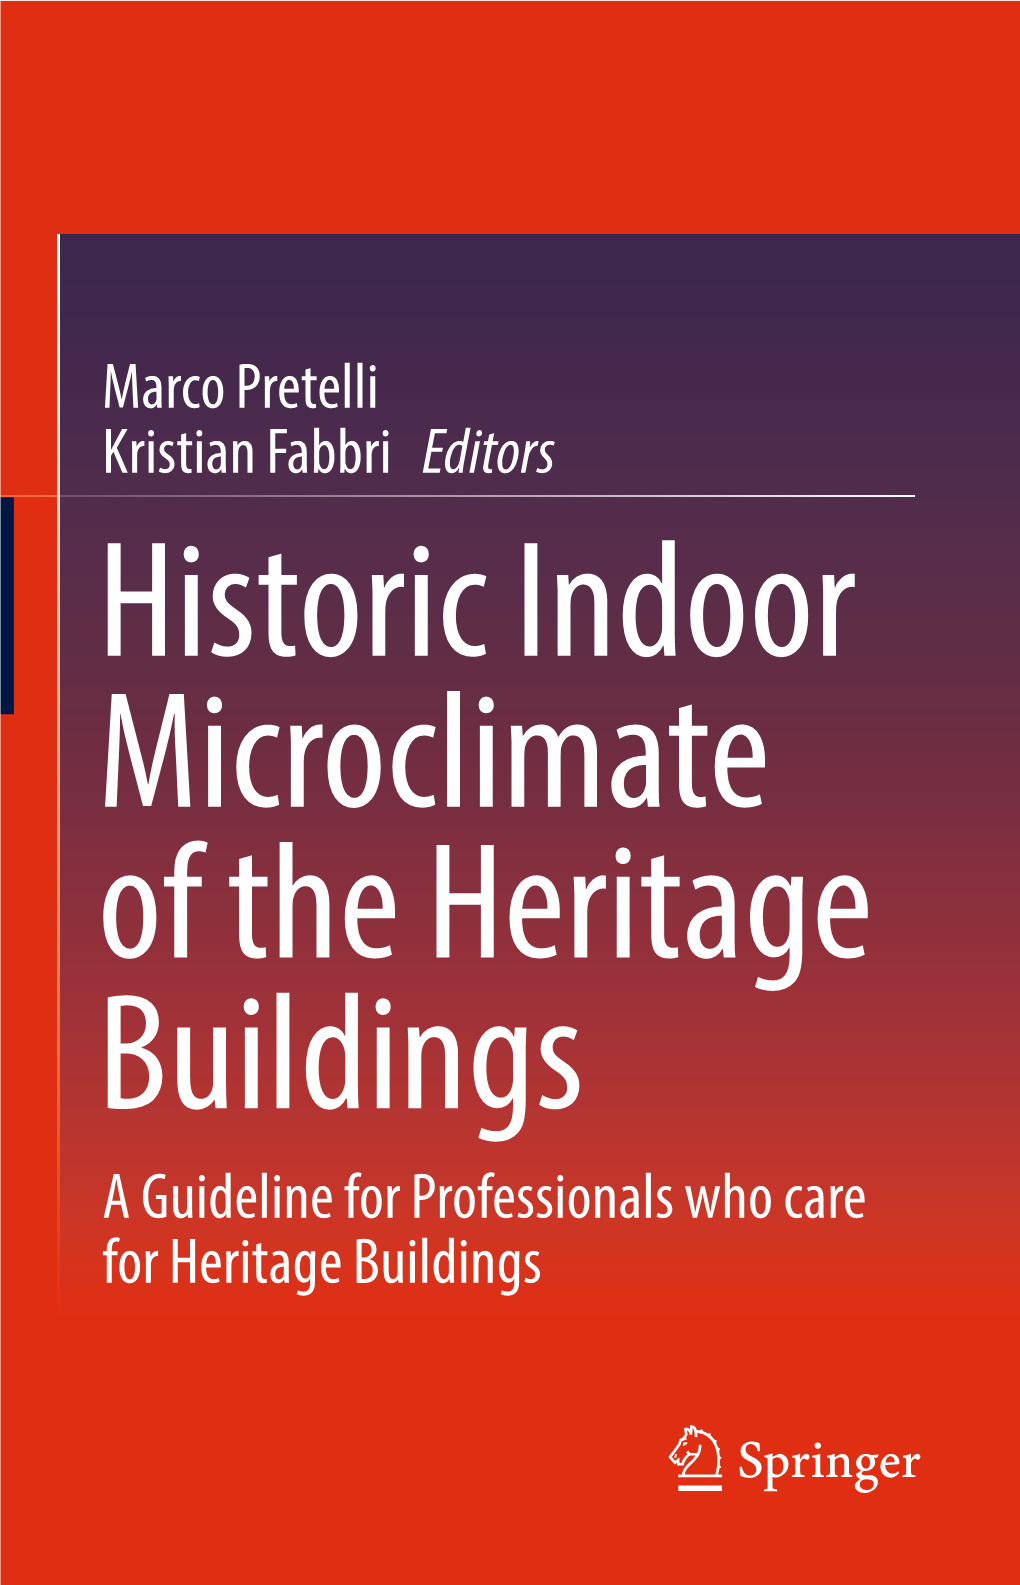 Marco Pretelli Kristian Fabbri Editors a Guideline for Professionals Who Care for Heritage Buildings